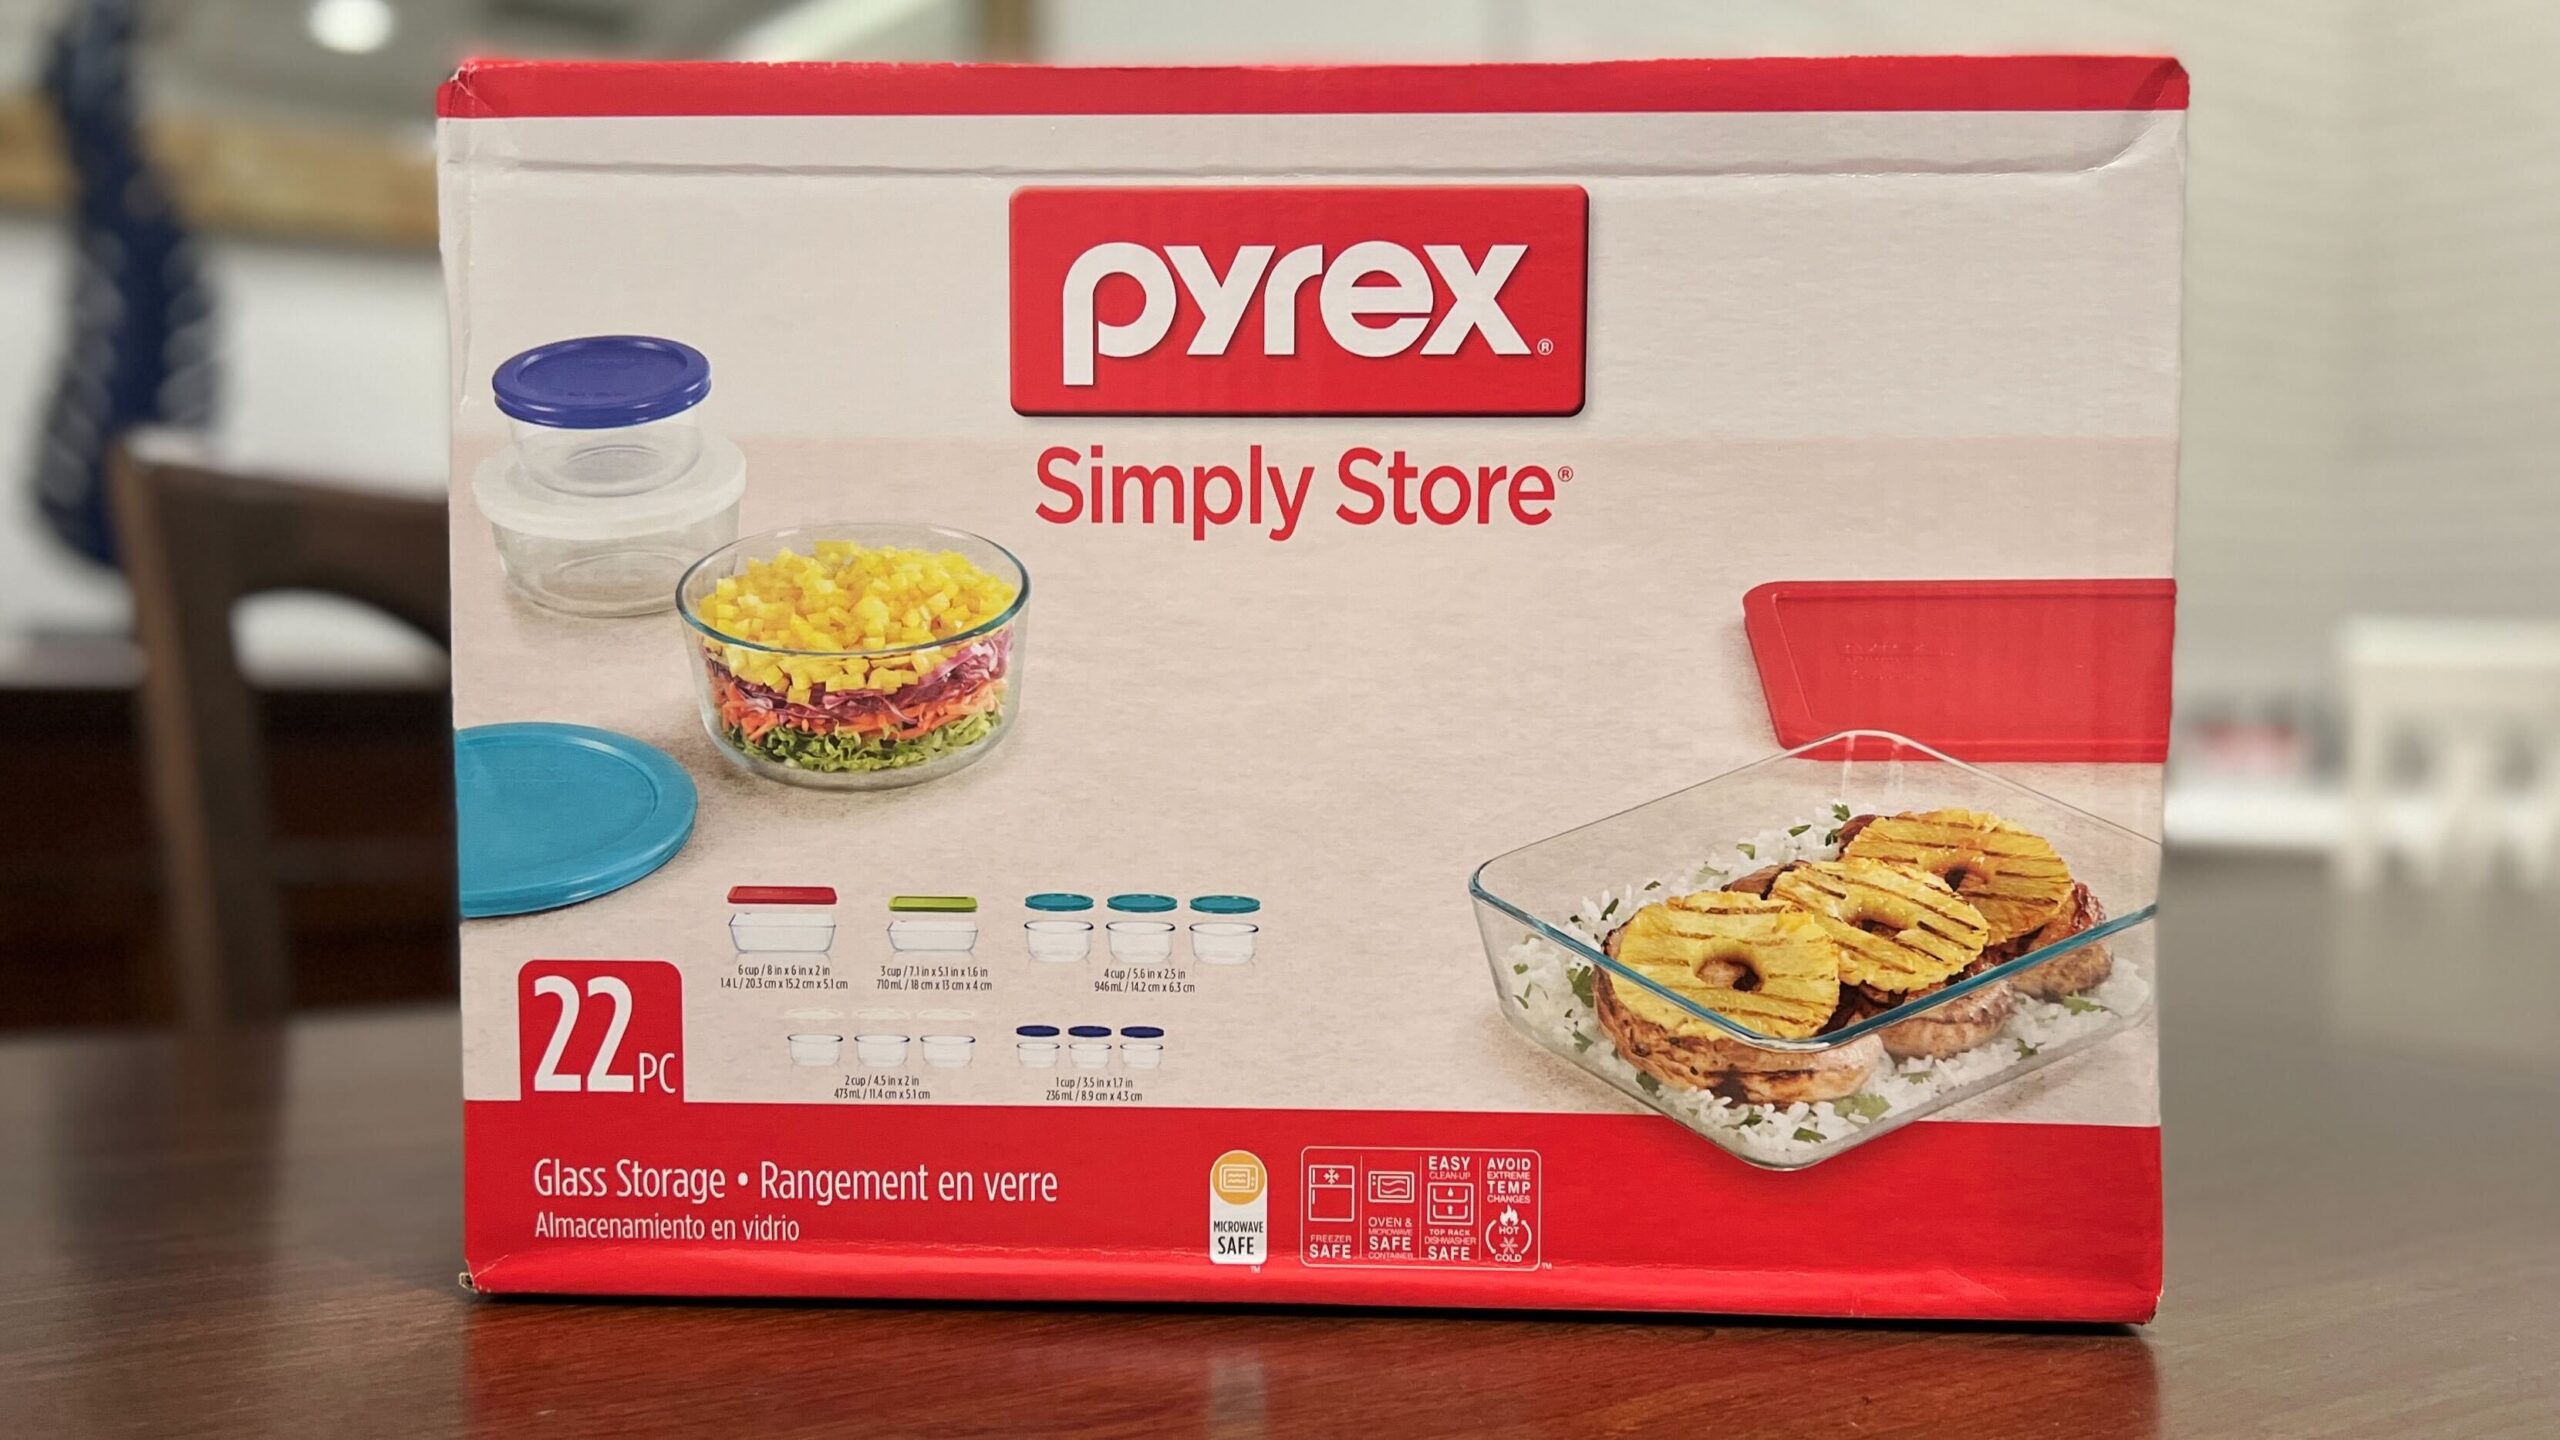 Macy's - Pyrex 22 Piece Glass Food Storage Set Only $29.99 - The